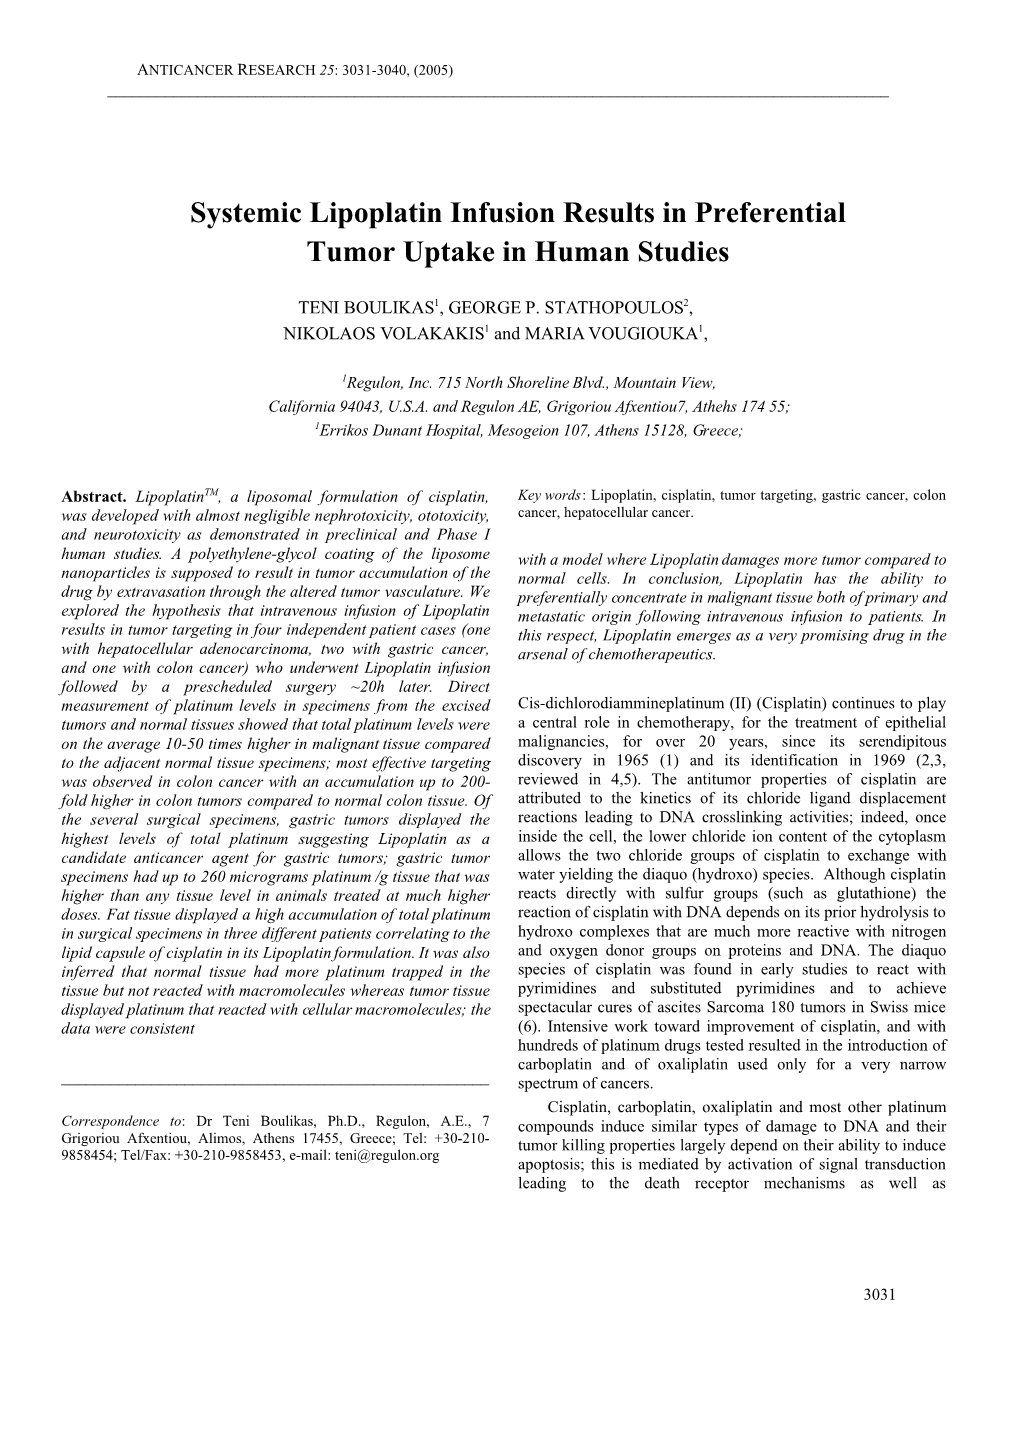 Systemic Lipoplatin Infusion Results in Preferential Tumor Uptake in Human Studies